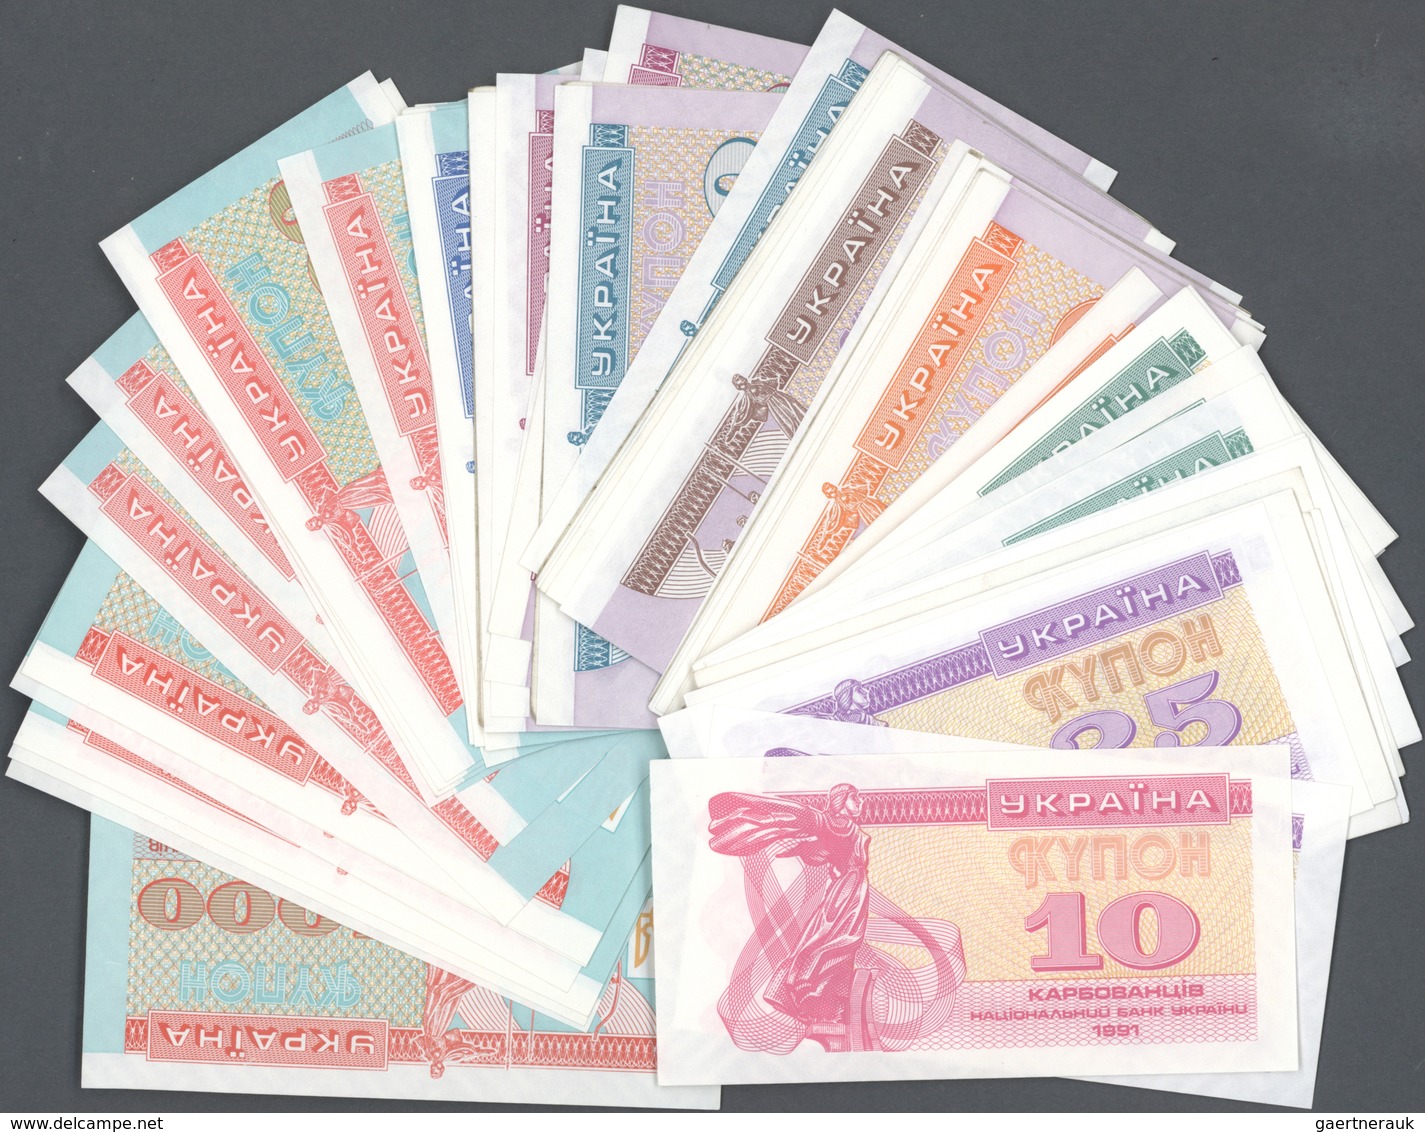 Ukraina / Ukraine: huge set with 337 Banknotes of the Ukrainian National Bank issues 1991 - 1995, co